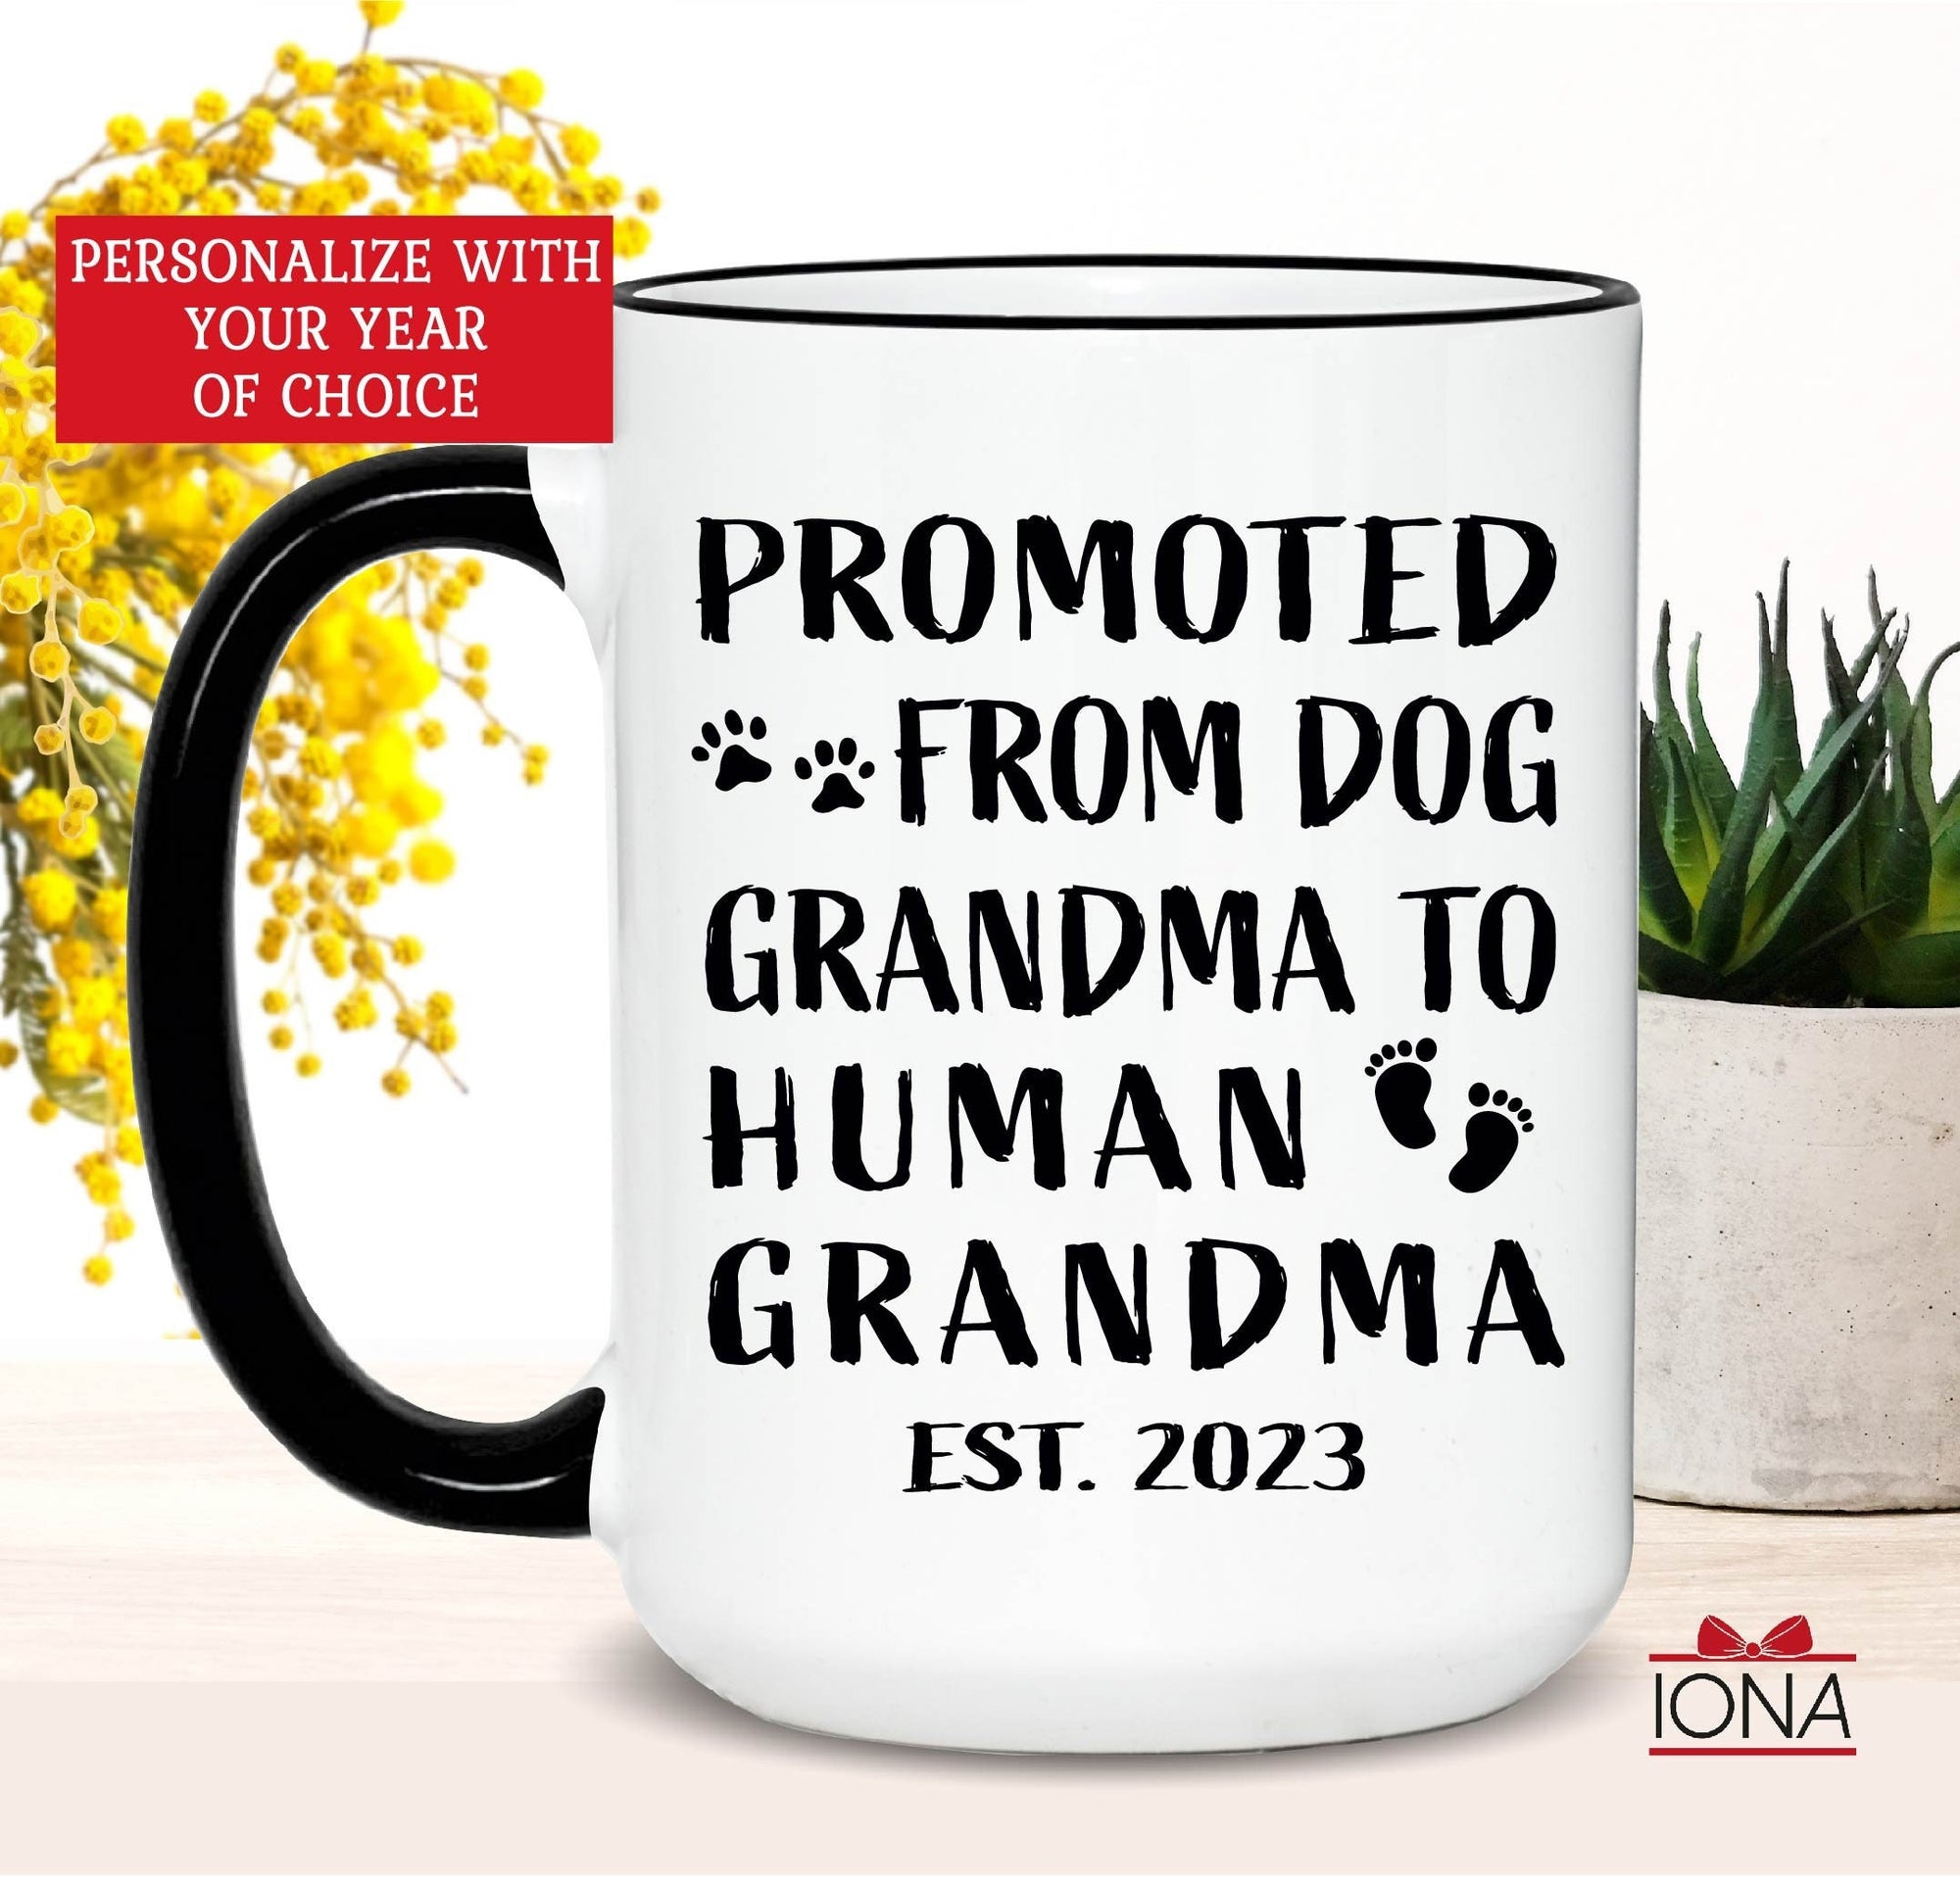 Pregnancy Announcement New Grandma Gift - New Grandma Promoted from Dog Grandma - New Grandma Coffee Mug - Promoted to Grandma Mug, New Baby